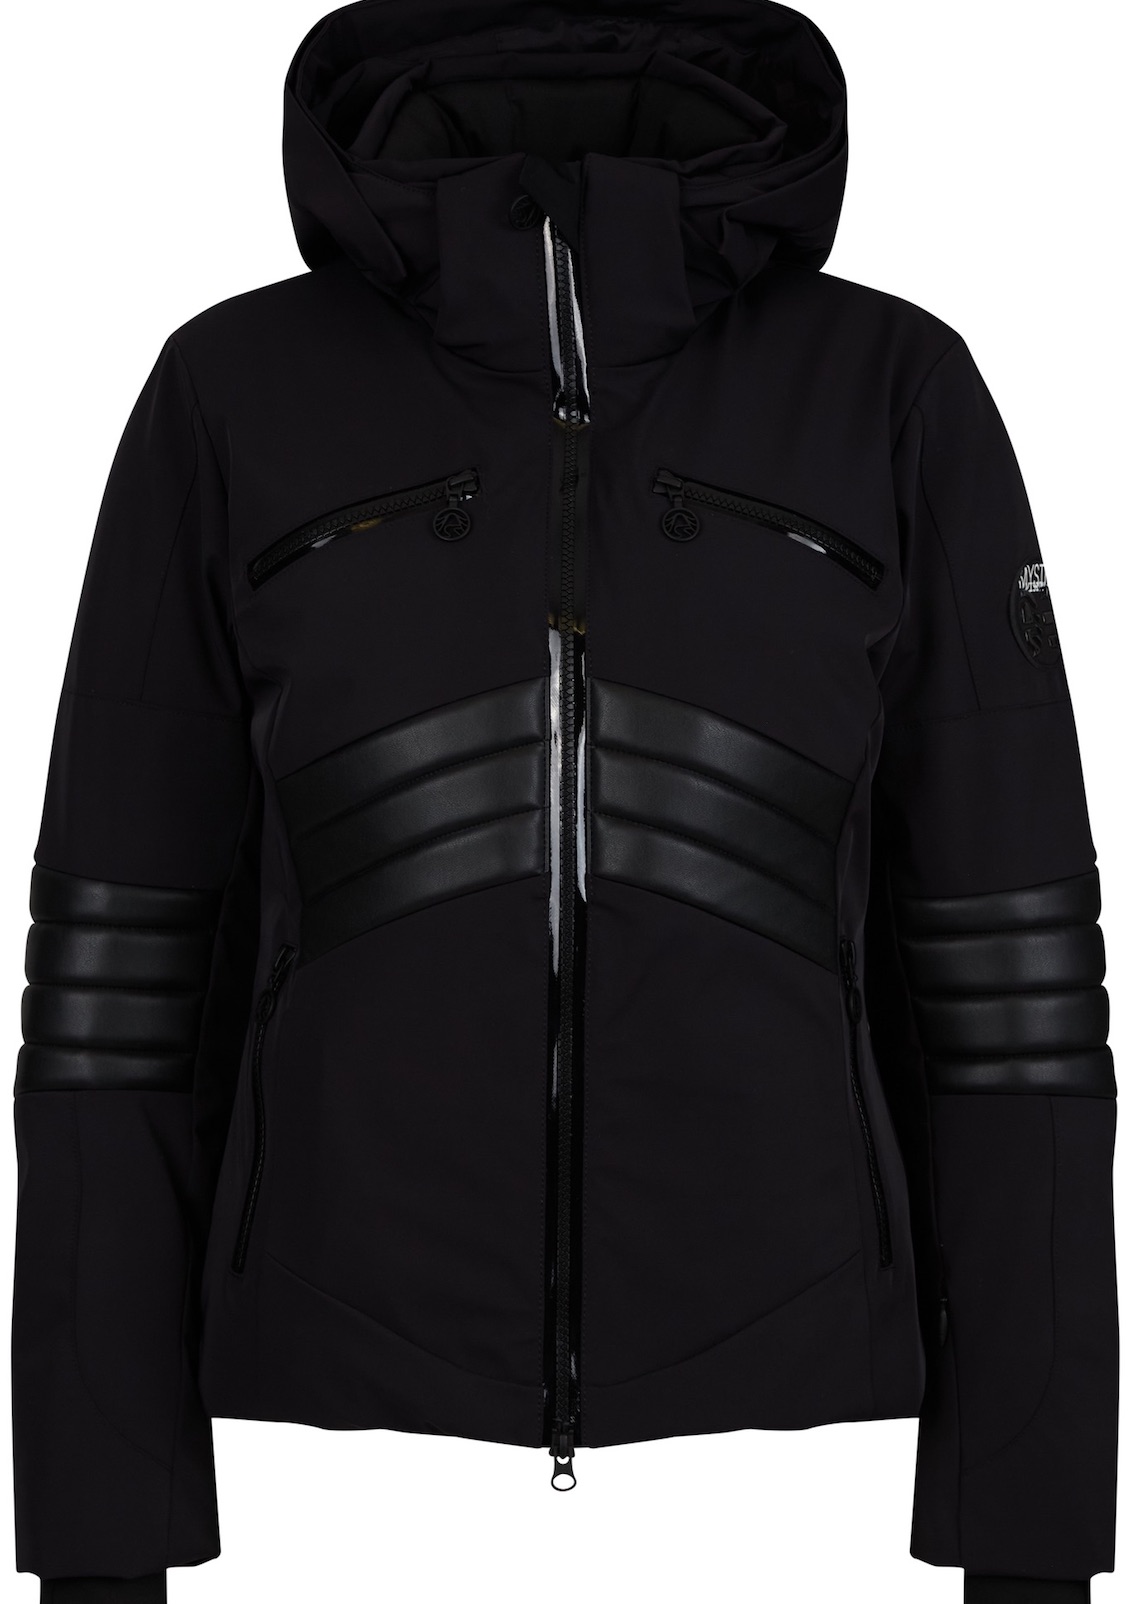 https://pepisports.com/images/products/SPORTALM-USA-LADY-YOKIMONA-JACKET-ladies-ski-wear-ladies-ski-jackets-parkas-01.jpg